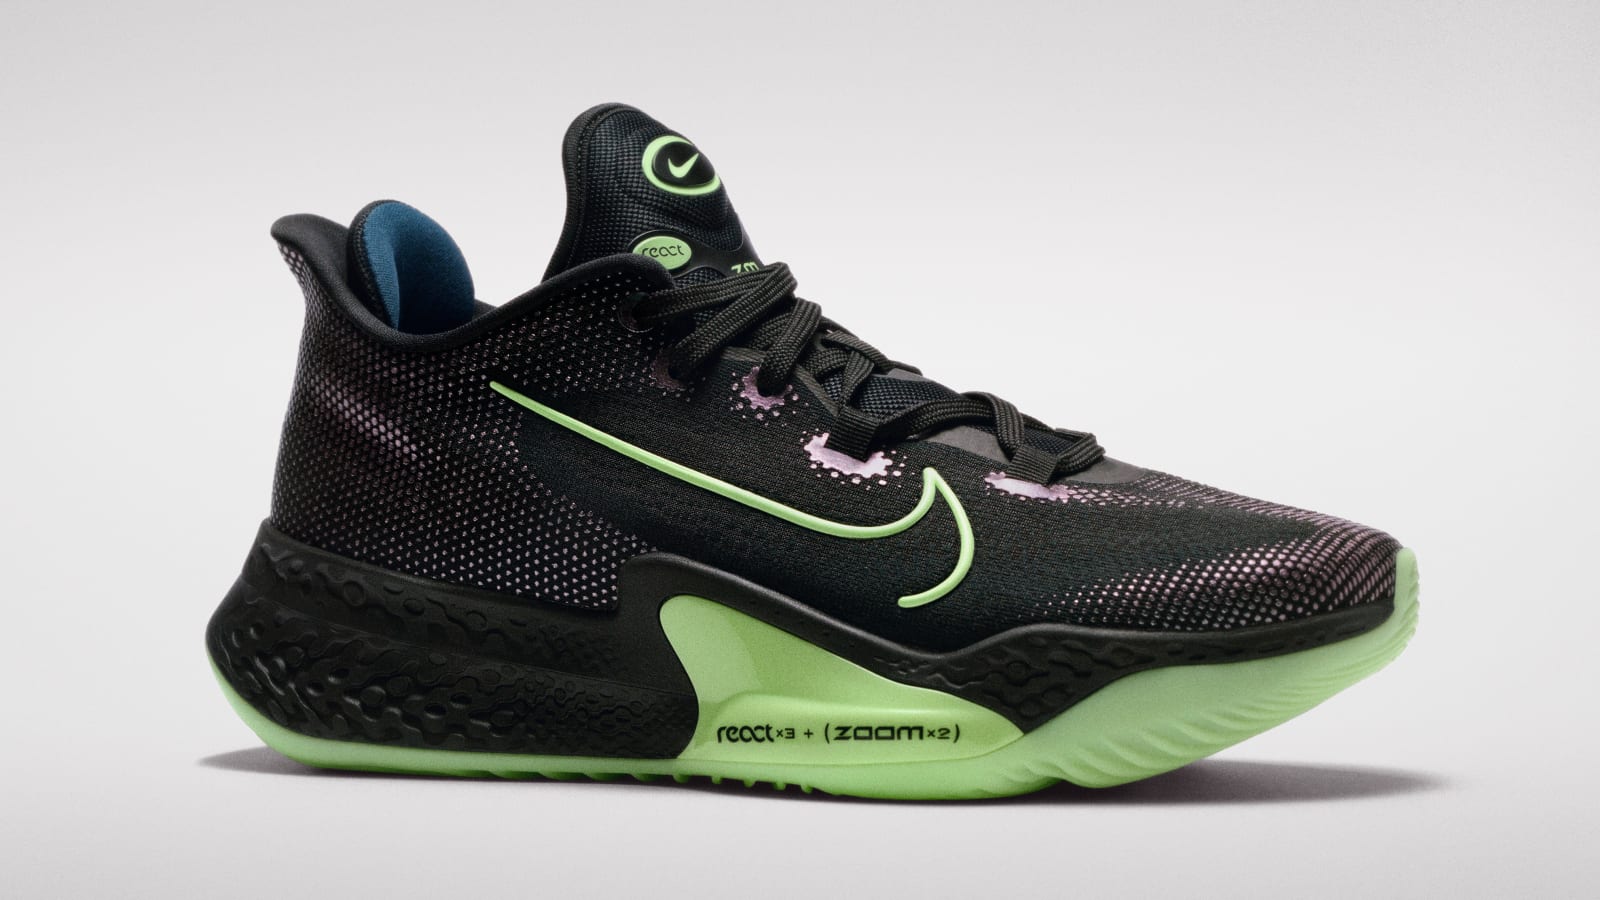 Nike's Latest Basketball Sneaker Revealed: Detailed Photos